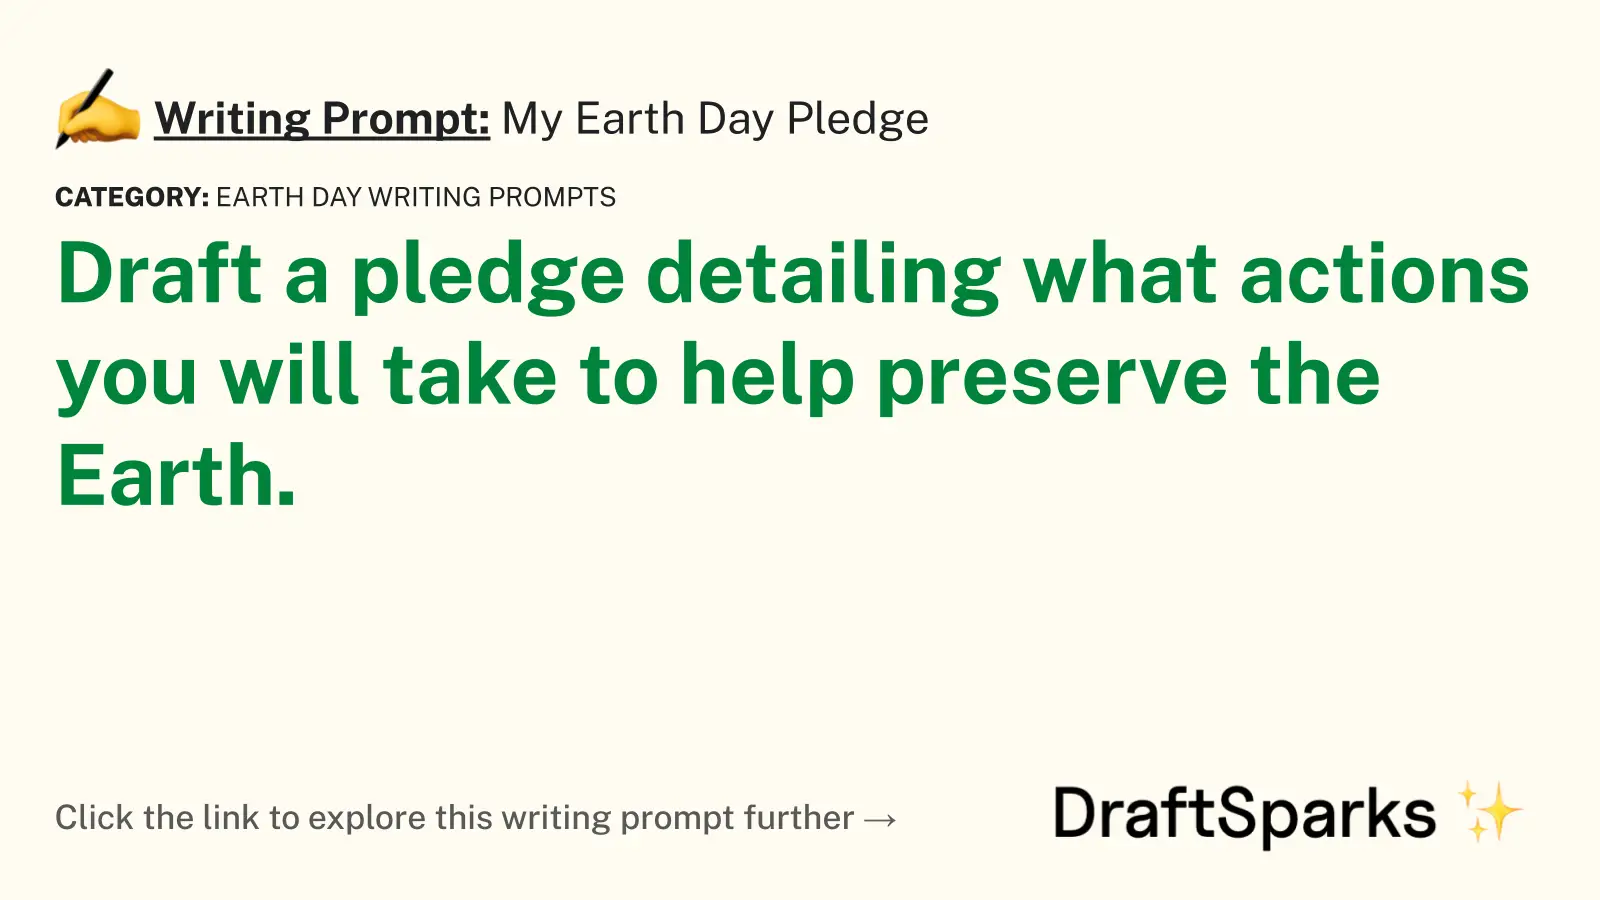 My Earth Day Pledge